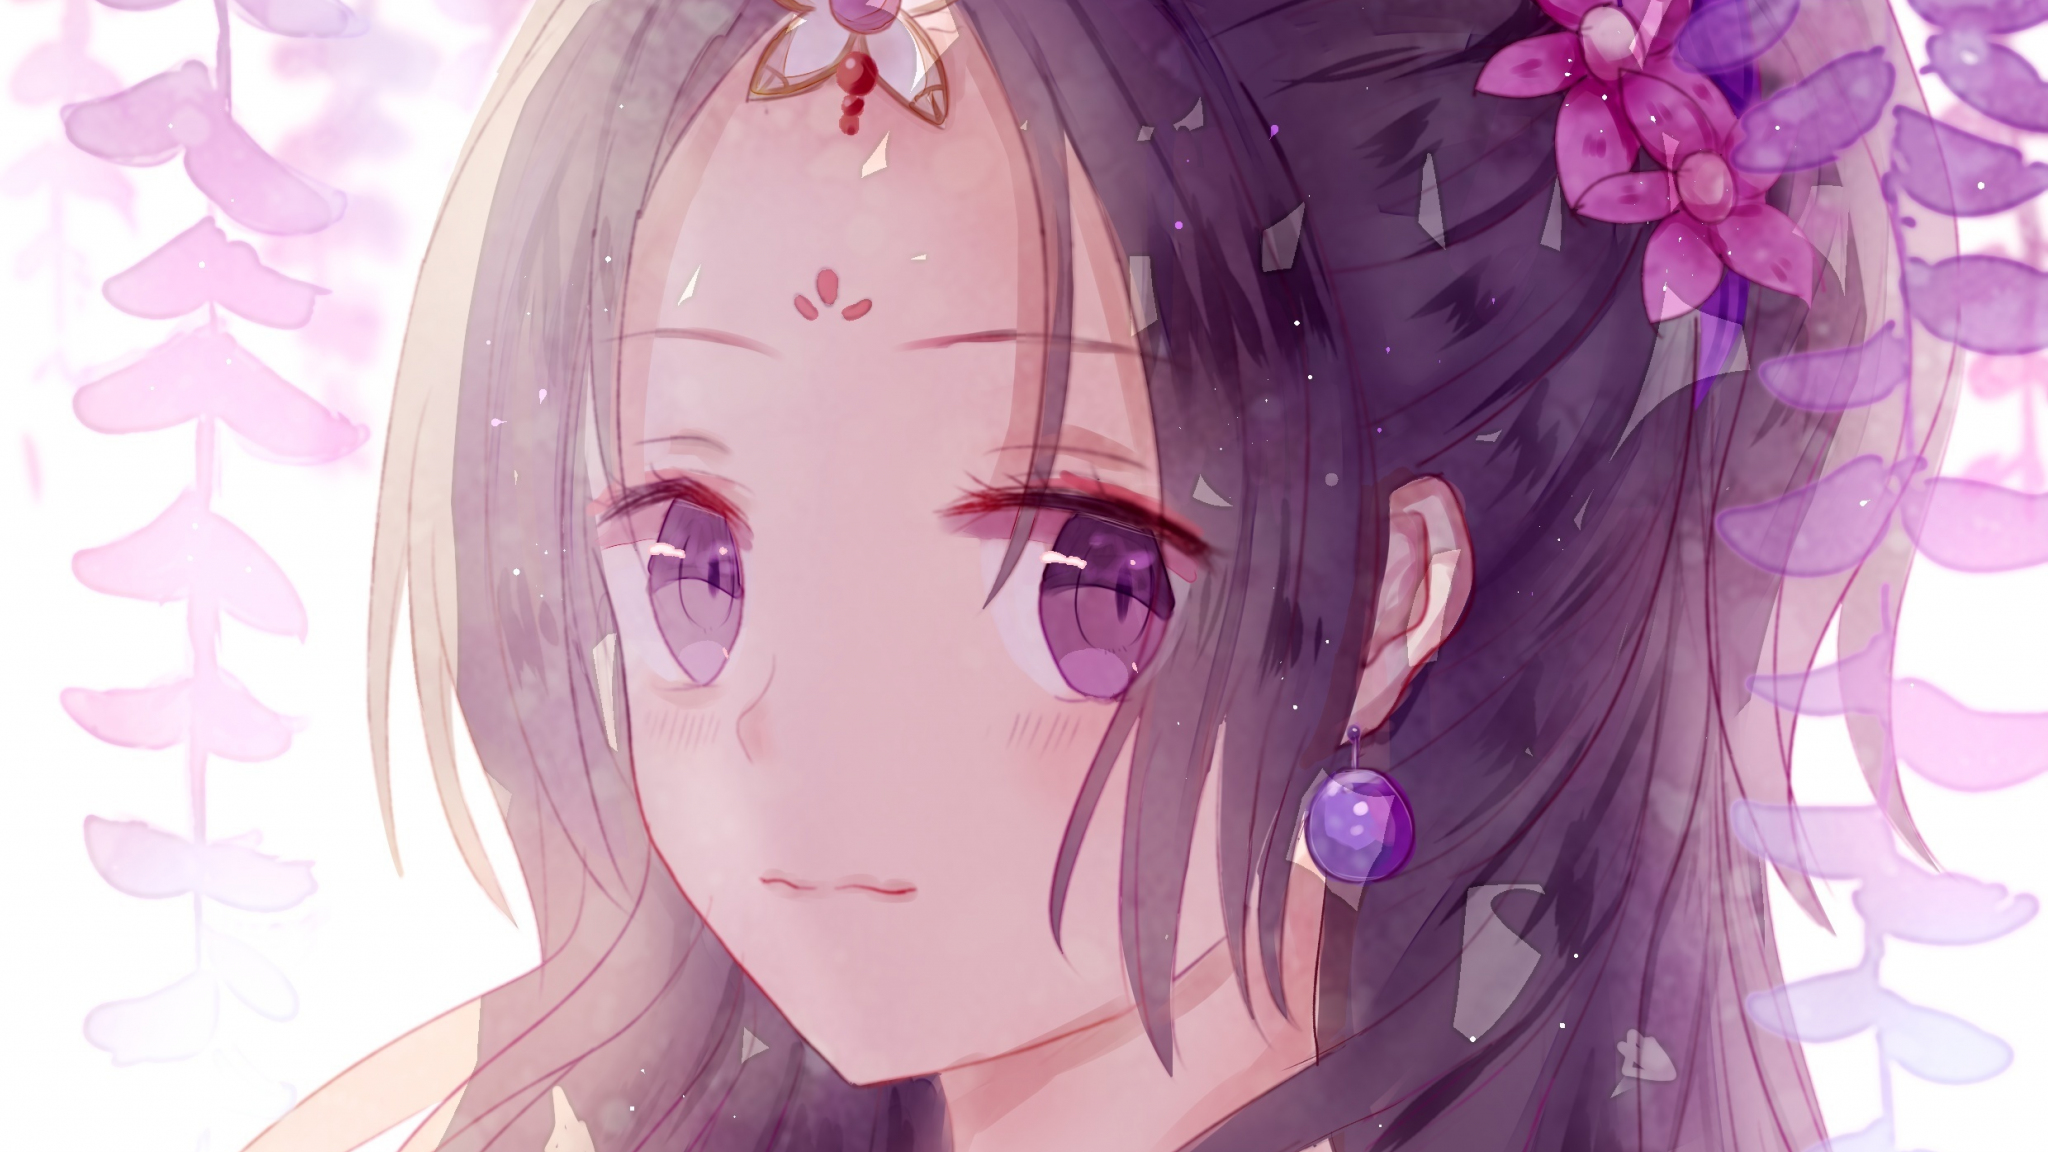 Download 2048x1152 Wallpaper Beautiful Anime Girl Purple Eyes Cutie Dual Wide Widescreen 2048x1152 Hd Image Background 5760